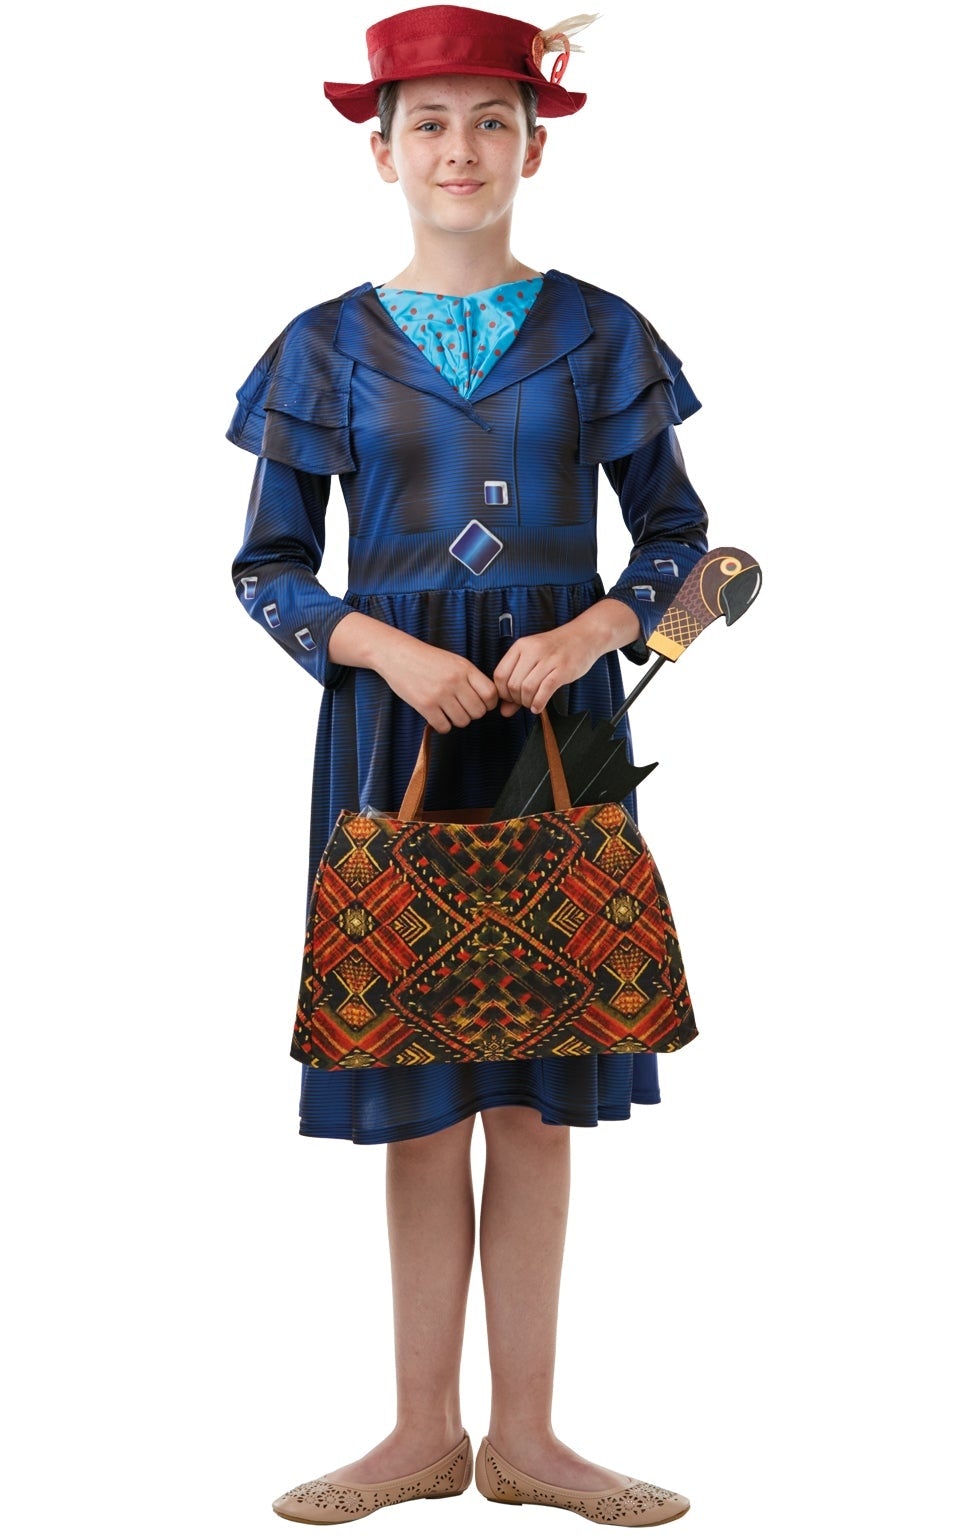 Mary Poppins Returns Costume for Girls_2